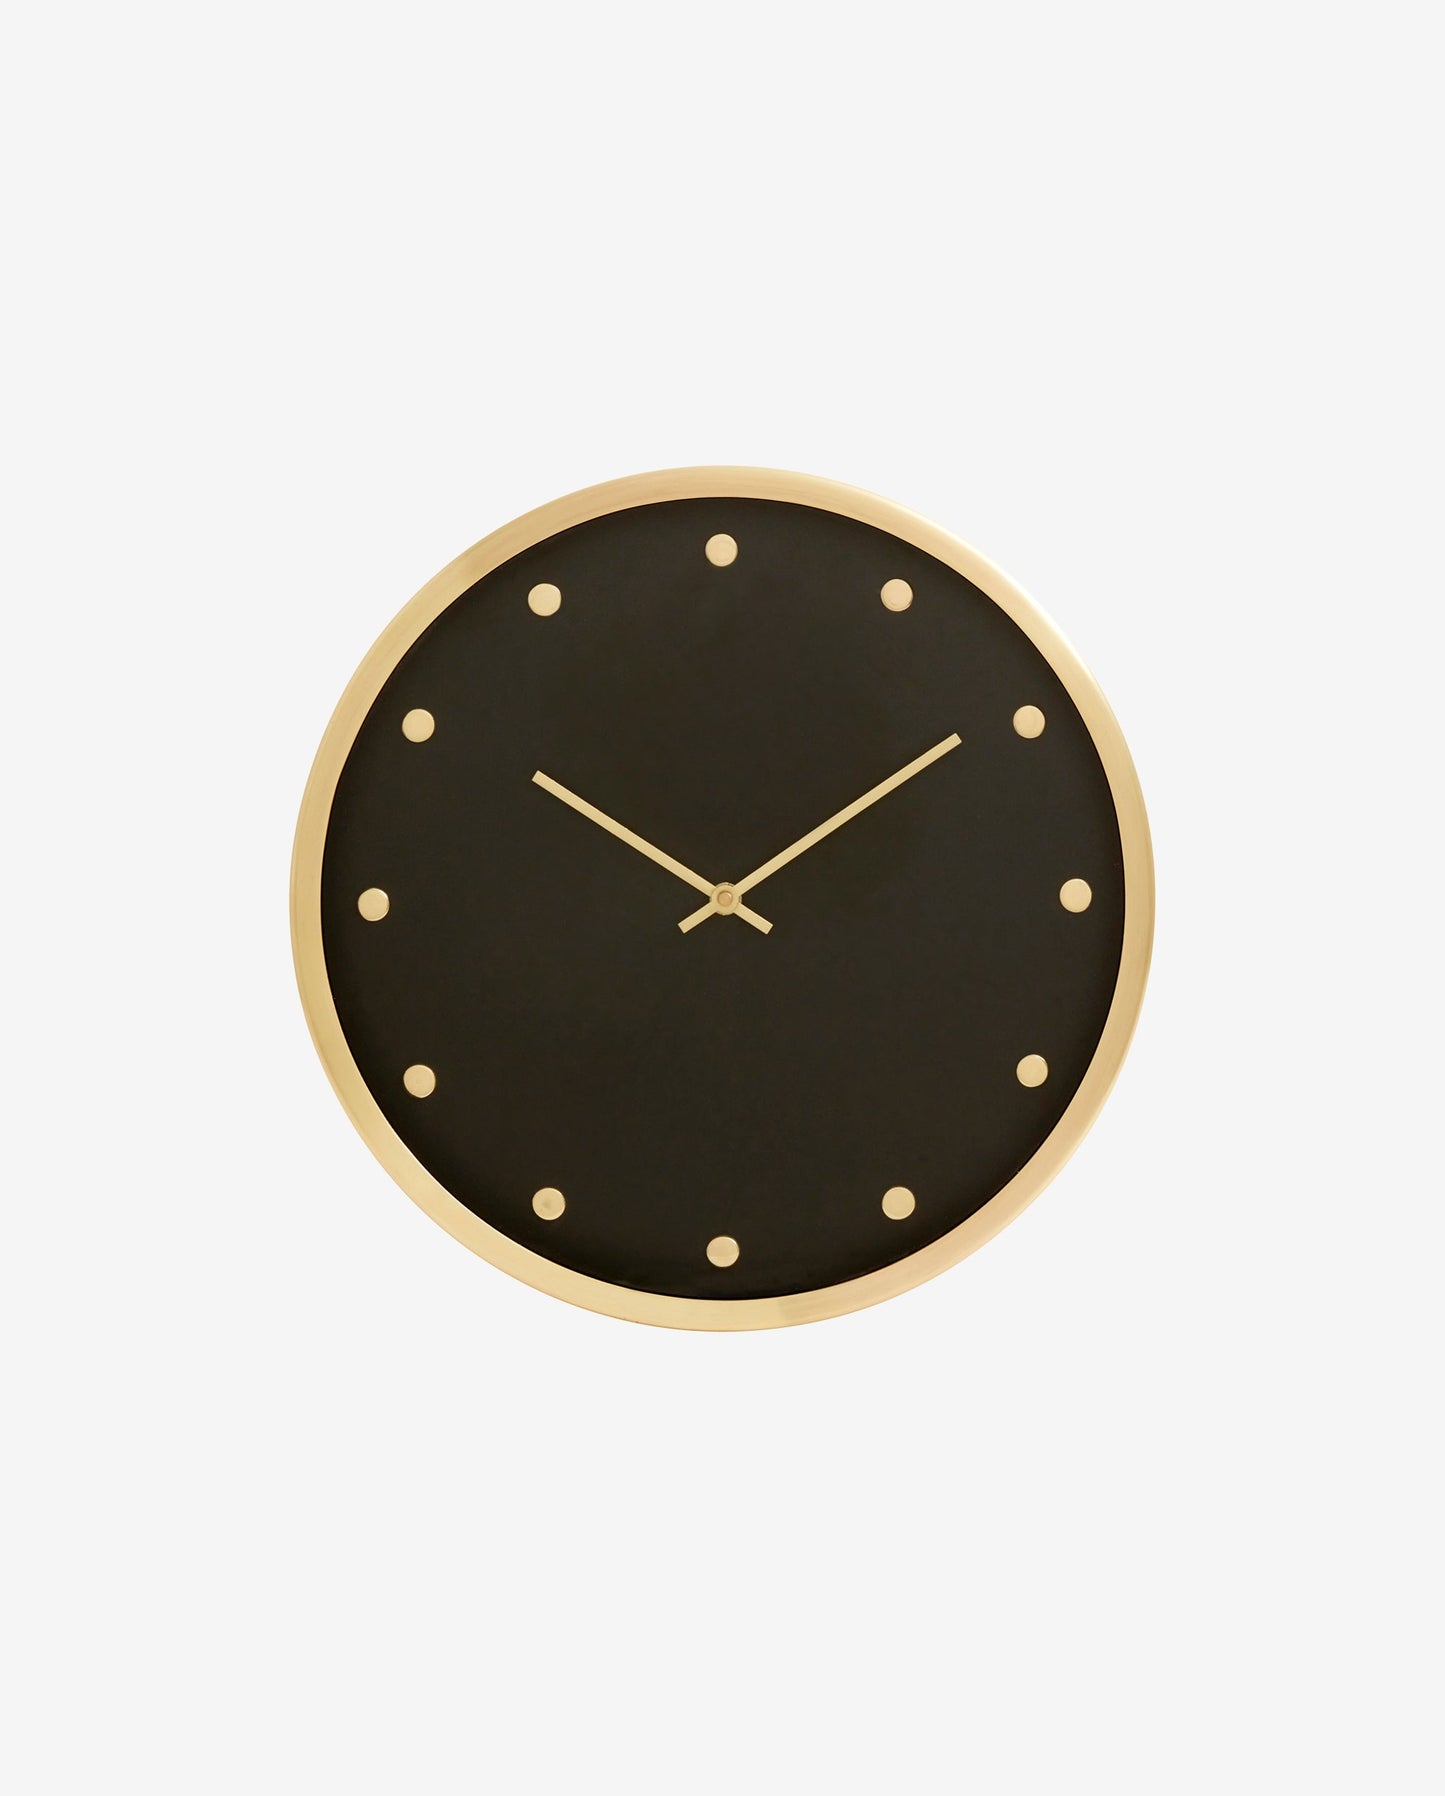 Nordal CARAT, wall clock, golden frame, dots